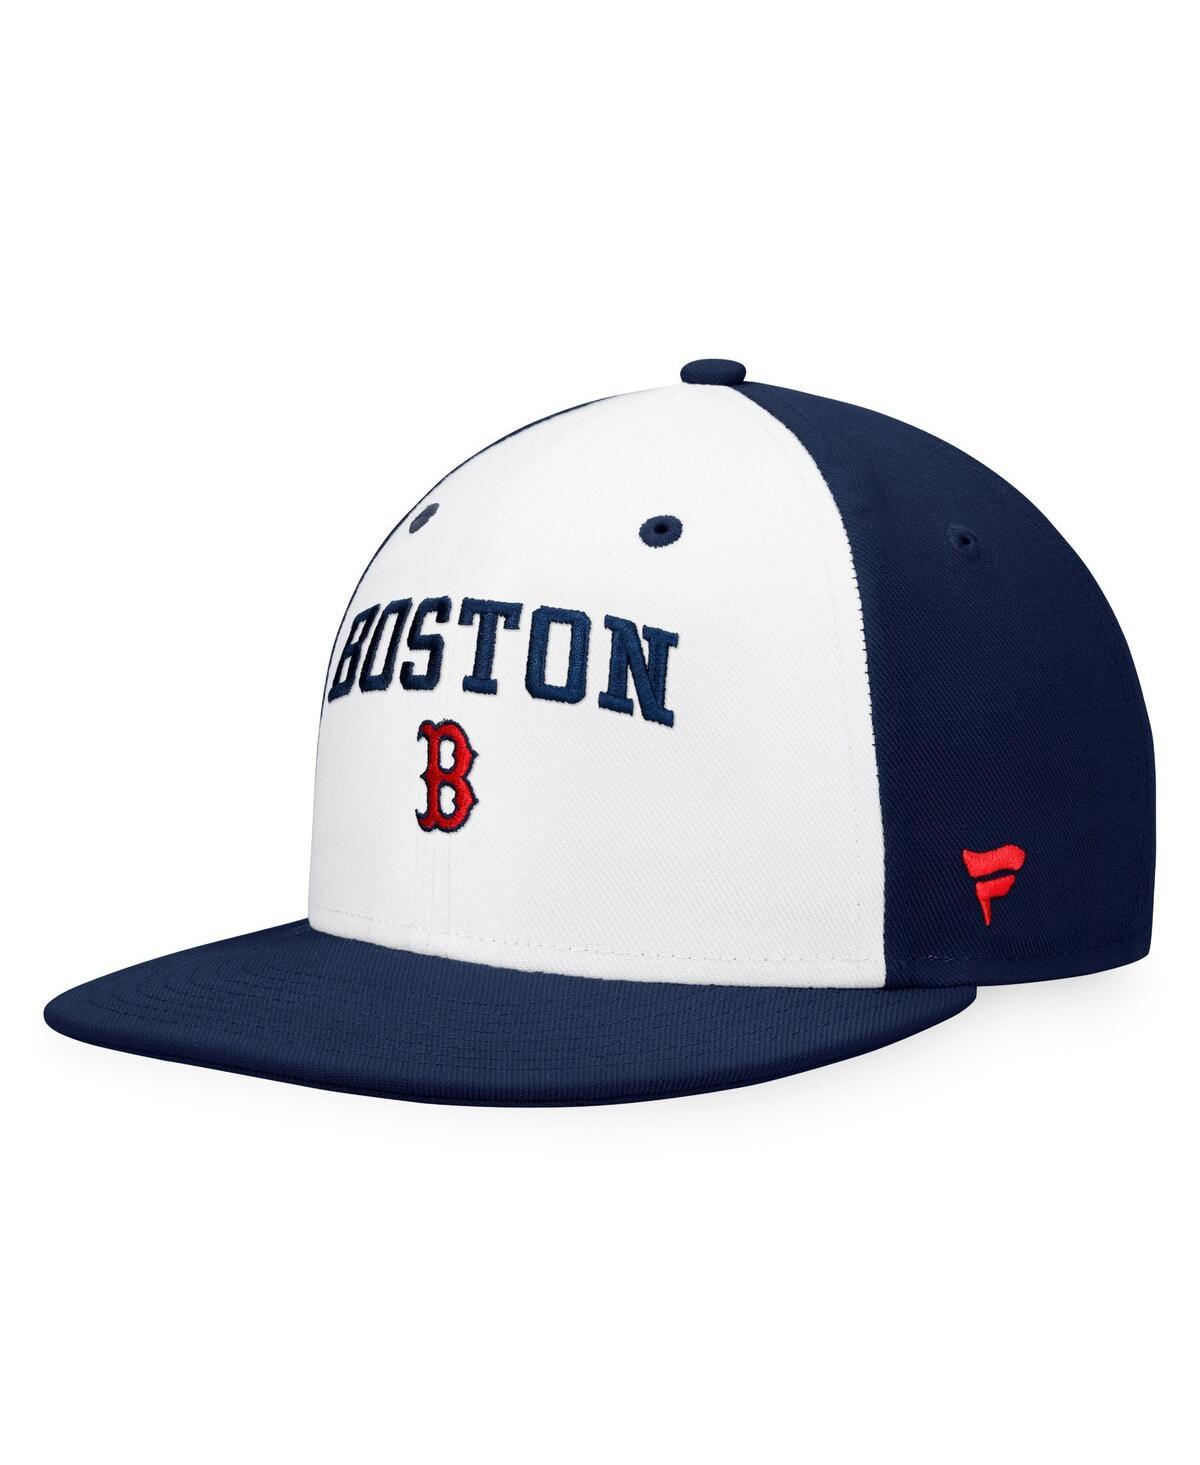 Boston Red Sox on Fanatics